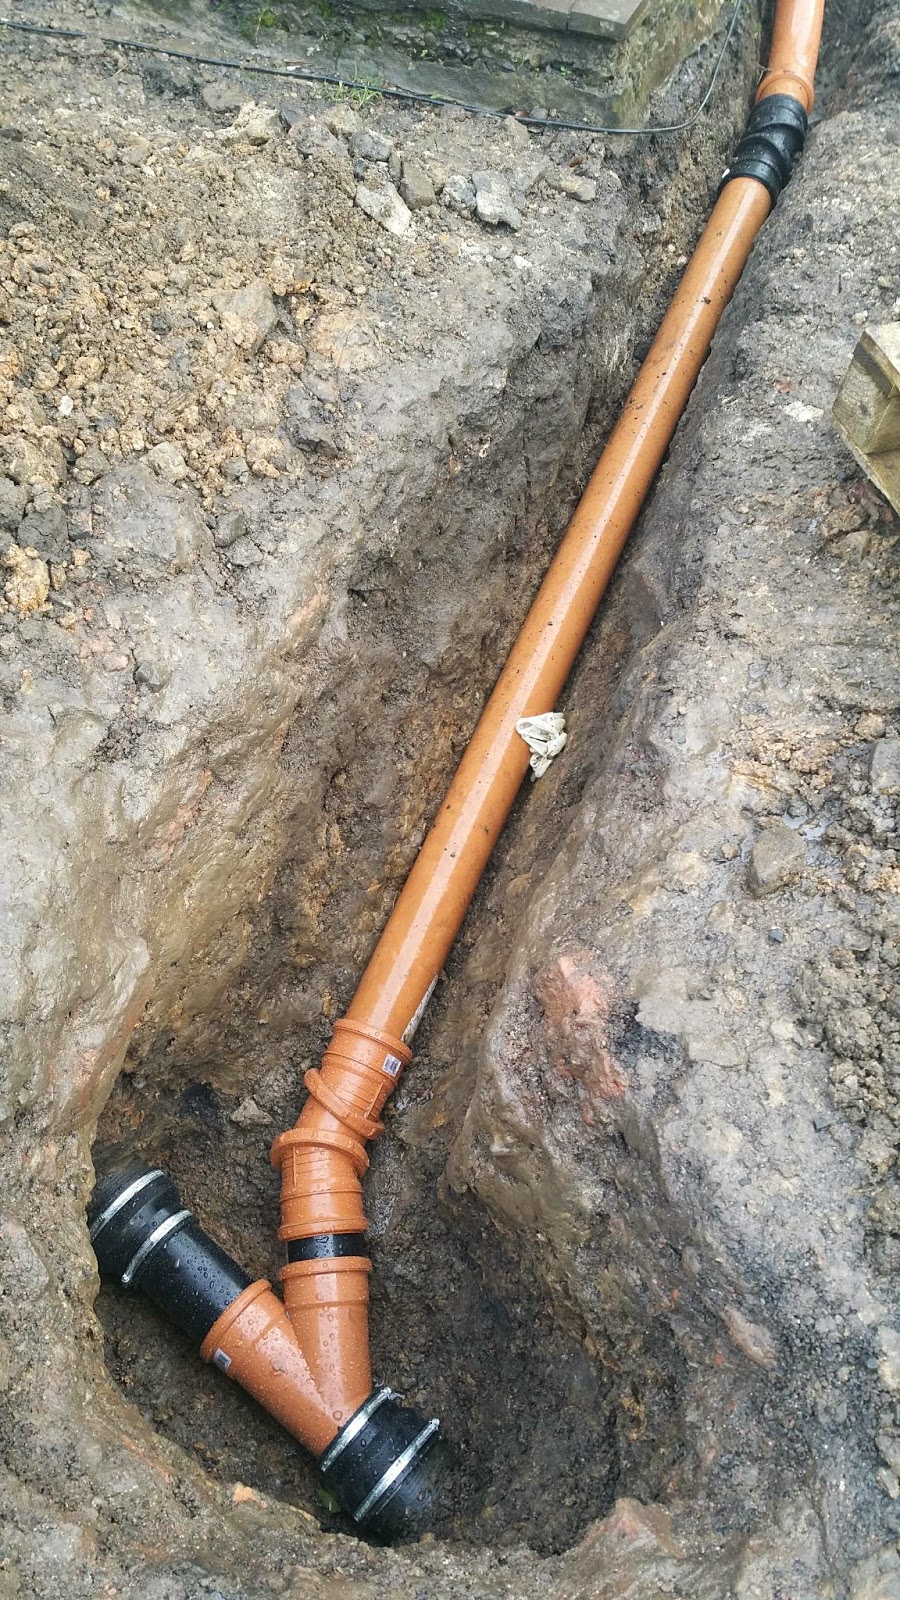 Soil waste pipe